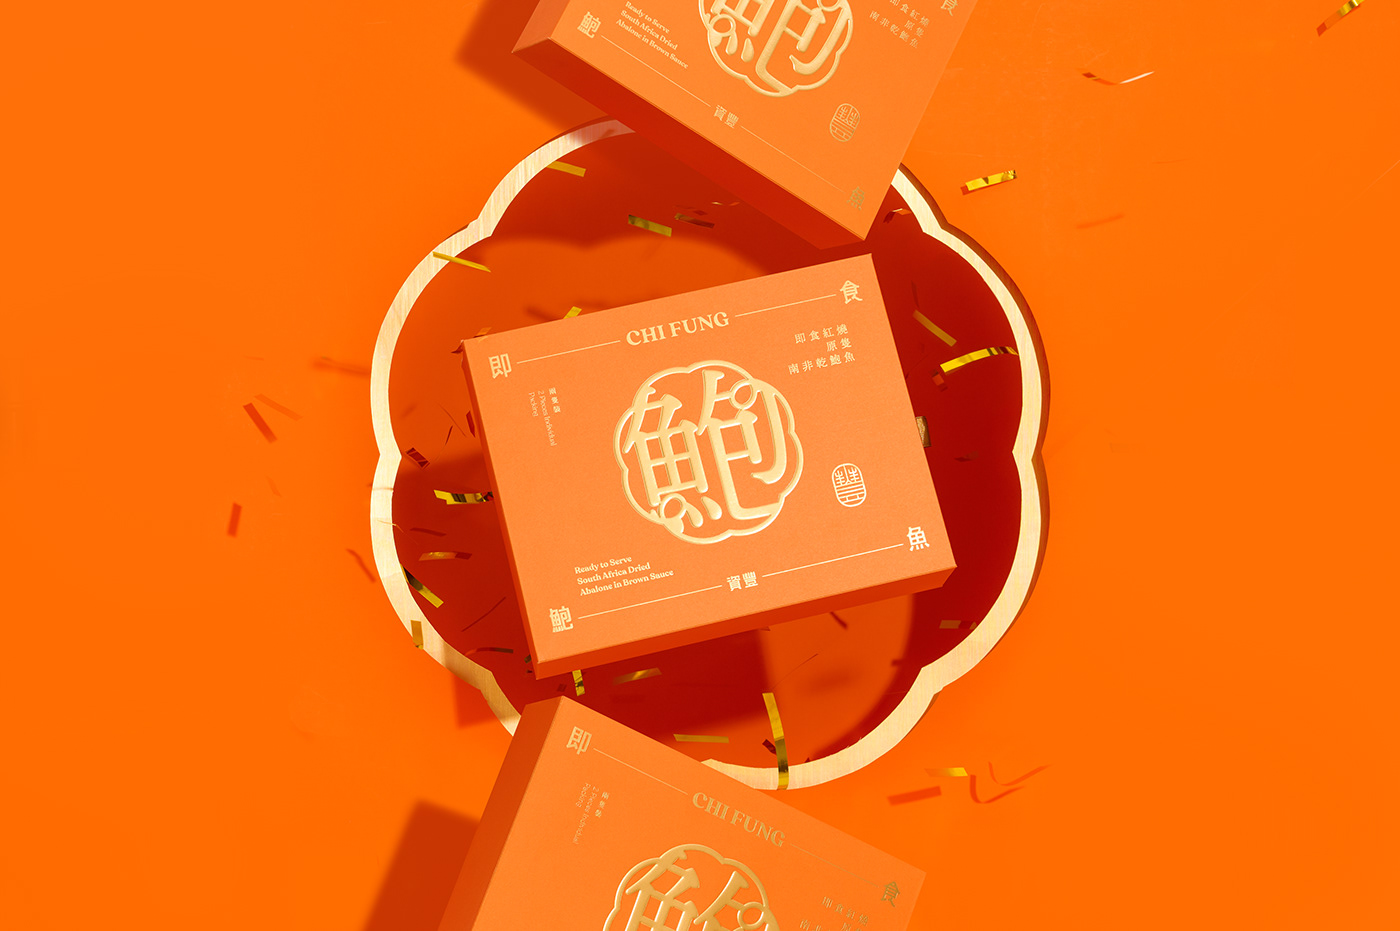 packaging design 中國風包裝 中式包裝 包裝設計 澳門設計 燕窩包裝 禮盒 禮盒包裝設計 禮盒攝影 鮑魚包裝